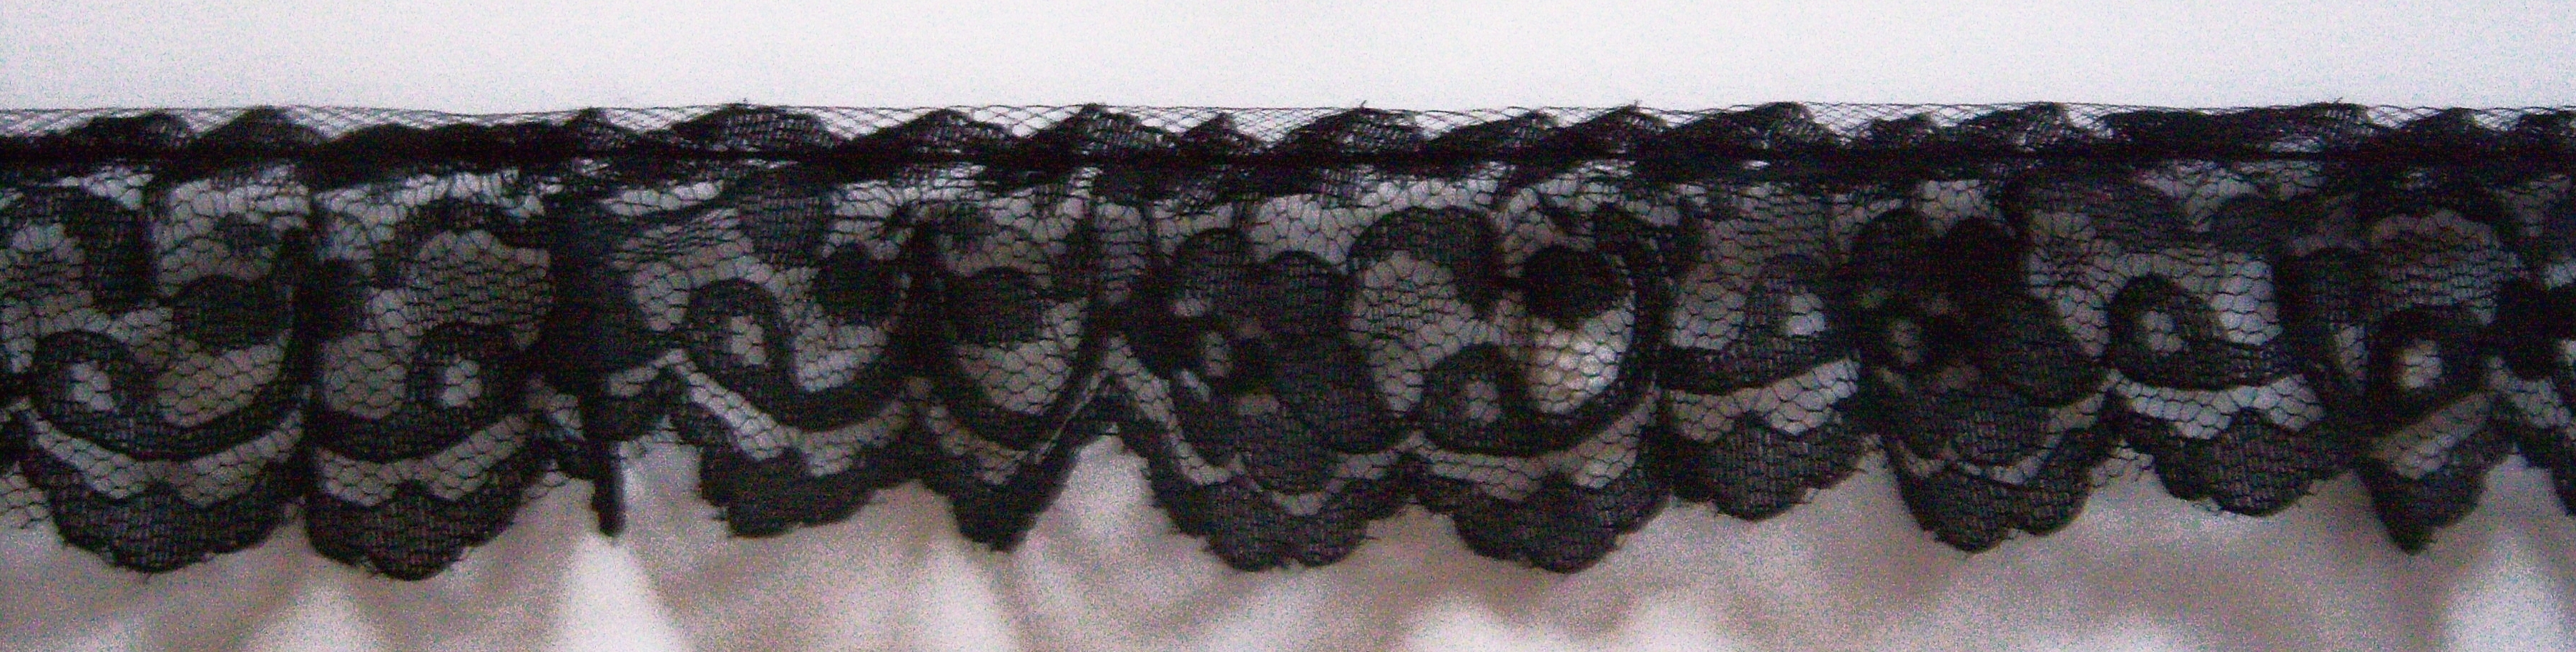 Black 1 1/2" Ruffled Lace